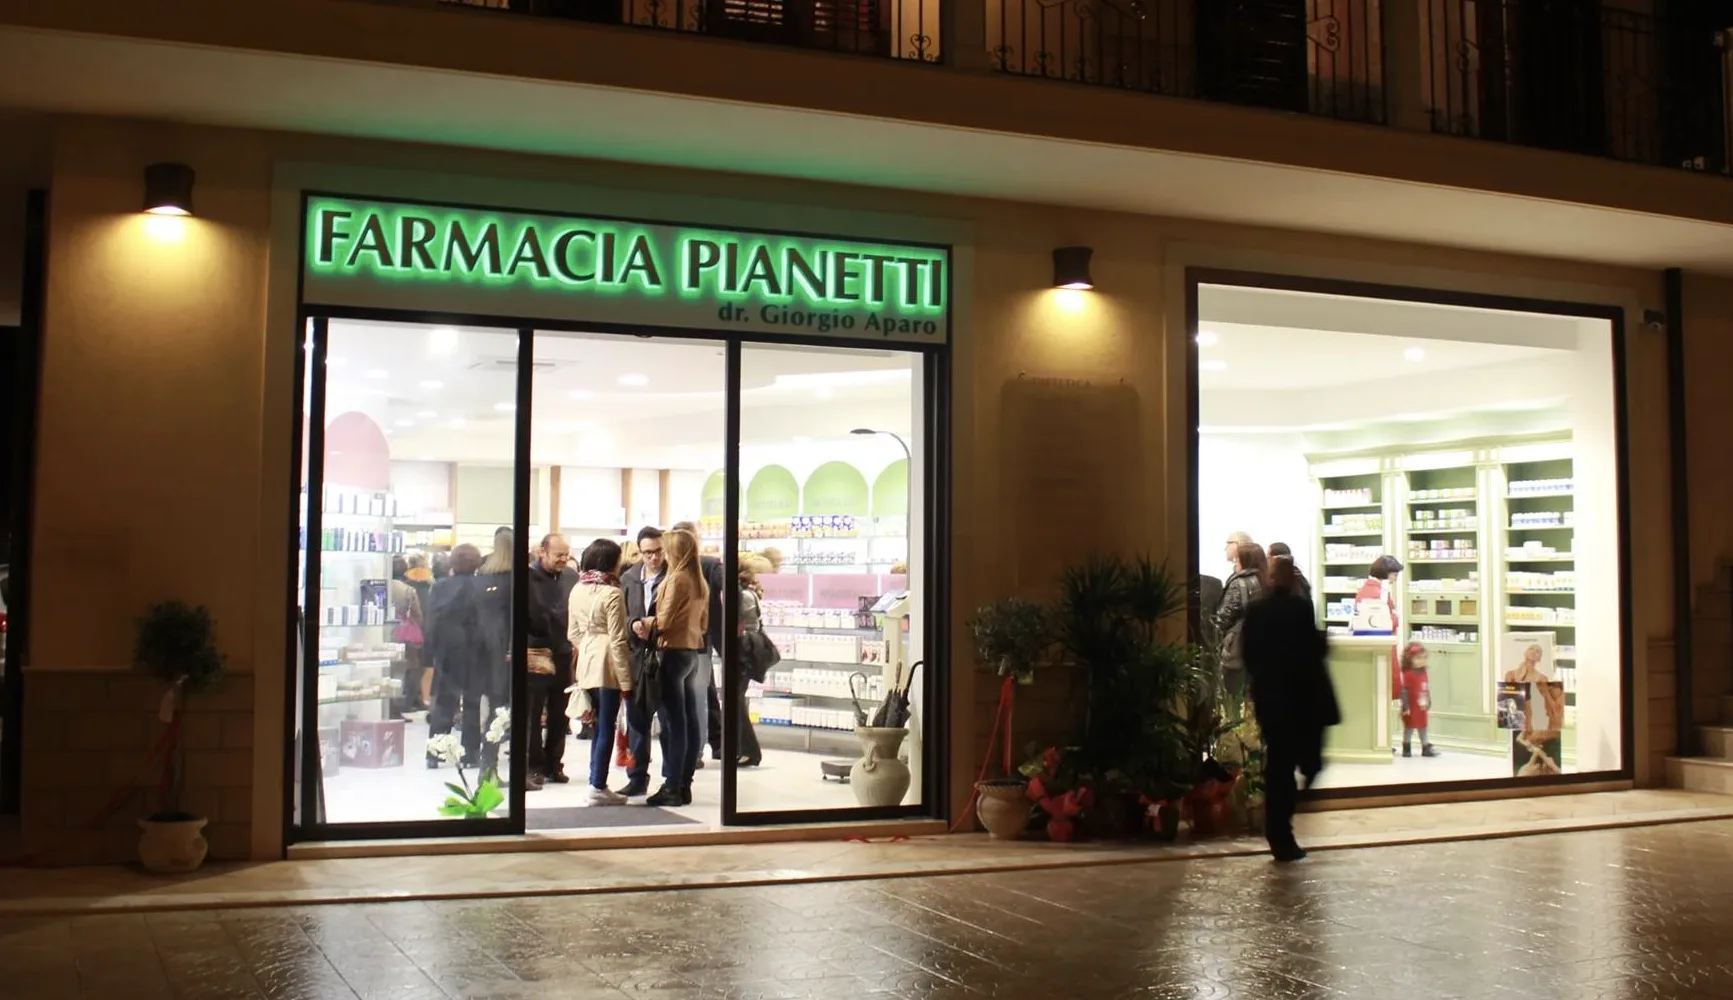 Farmacia Ragusa - Pianetti